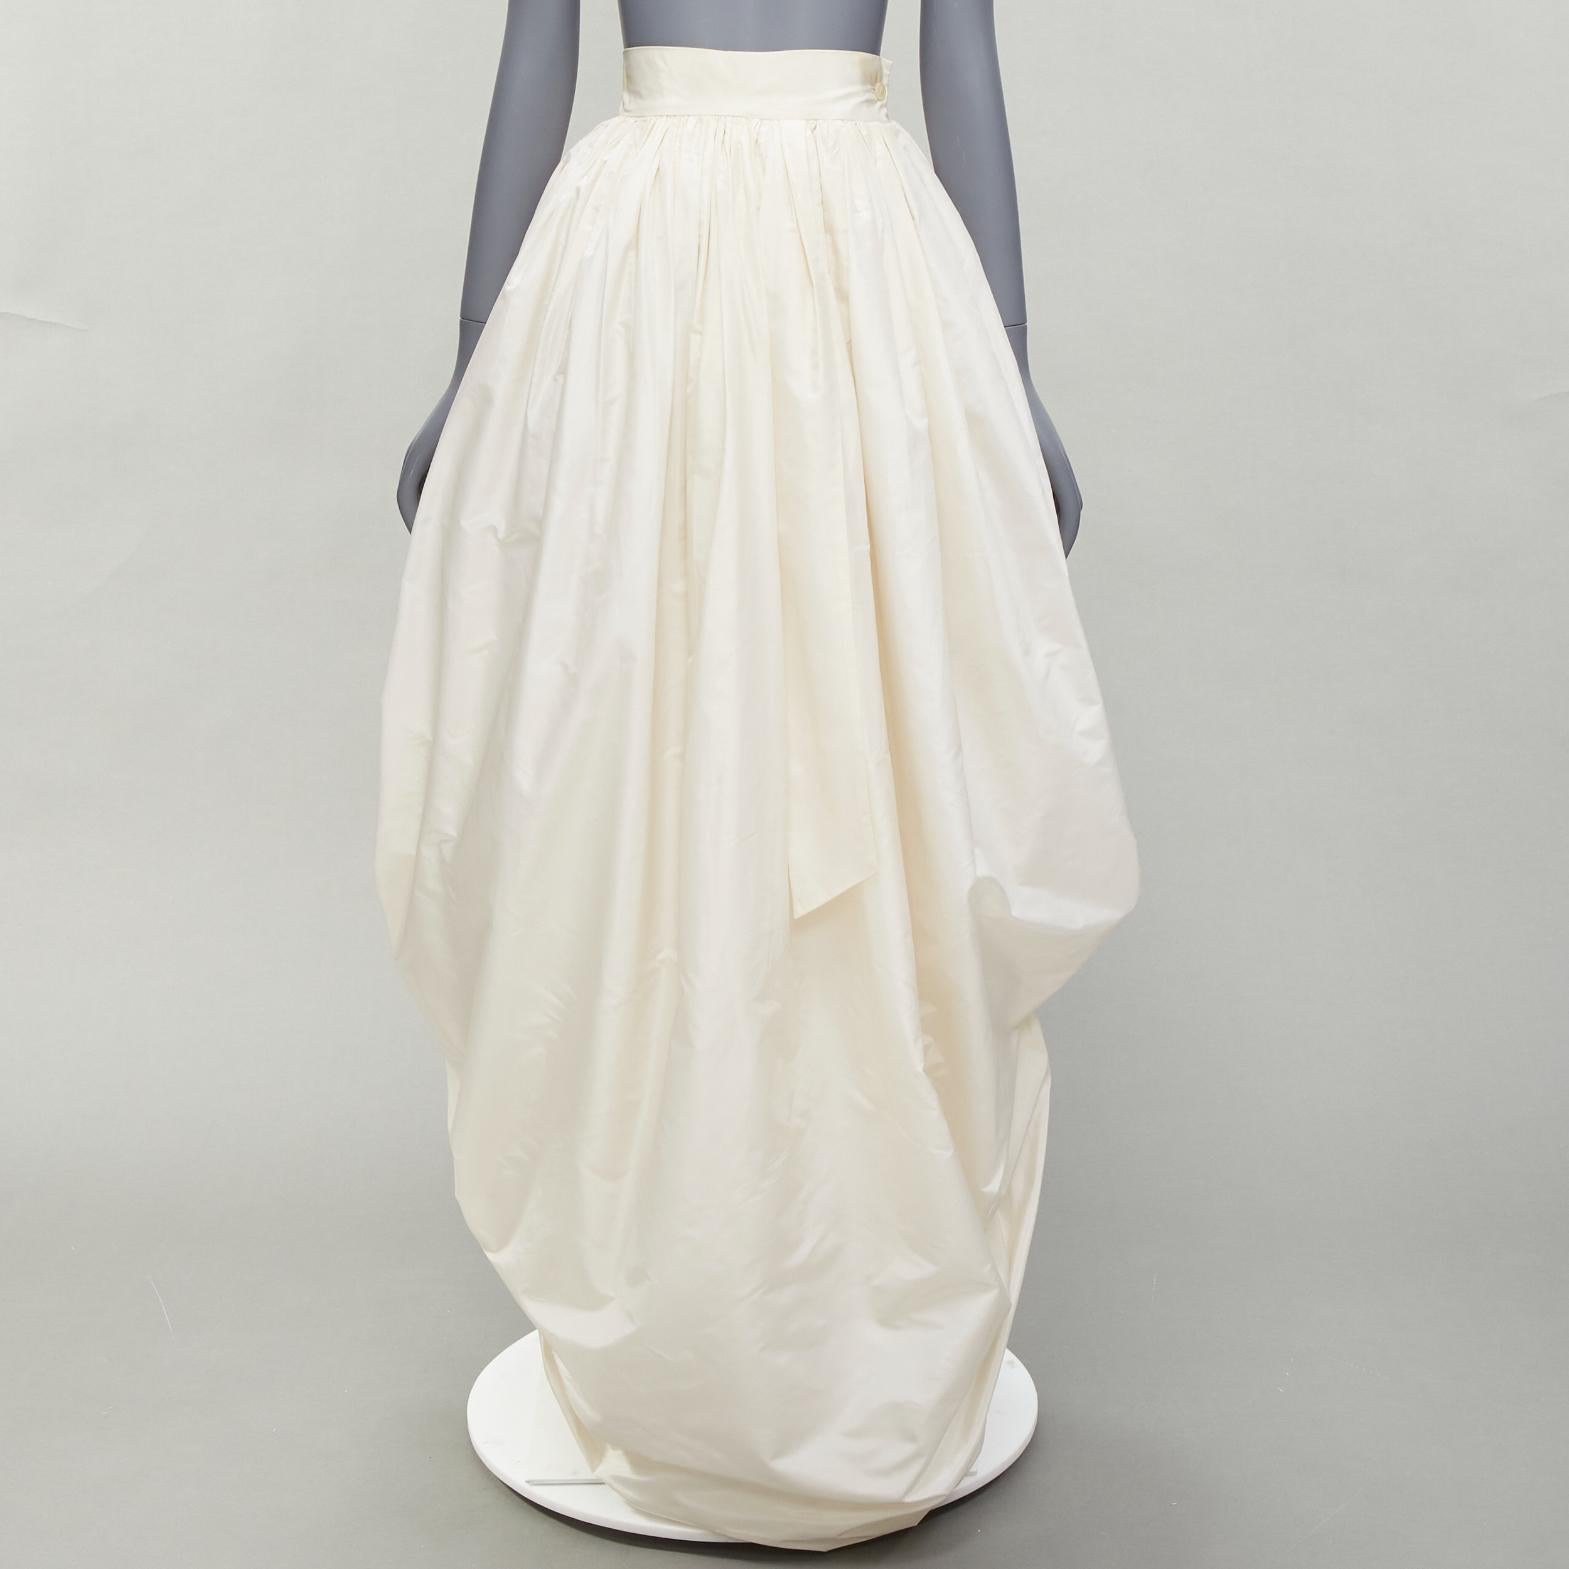 DOLCE GABBANA 1990s Vintage corset bustier tulle skirt 2 piece bridal dress IT38 For Sale 9